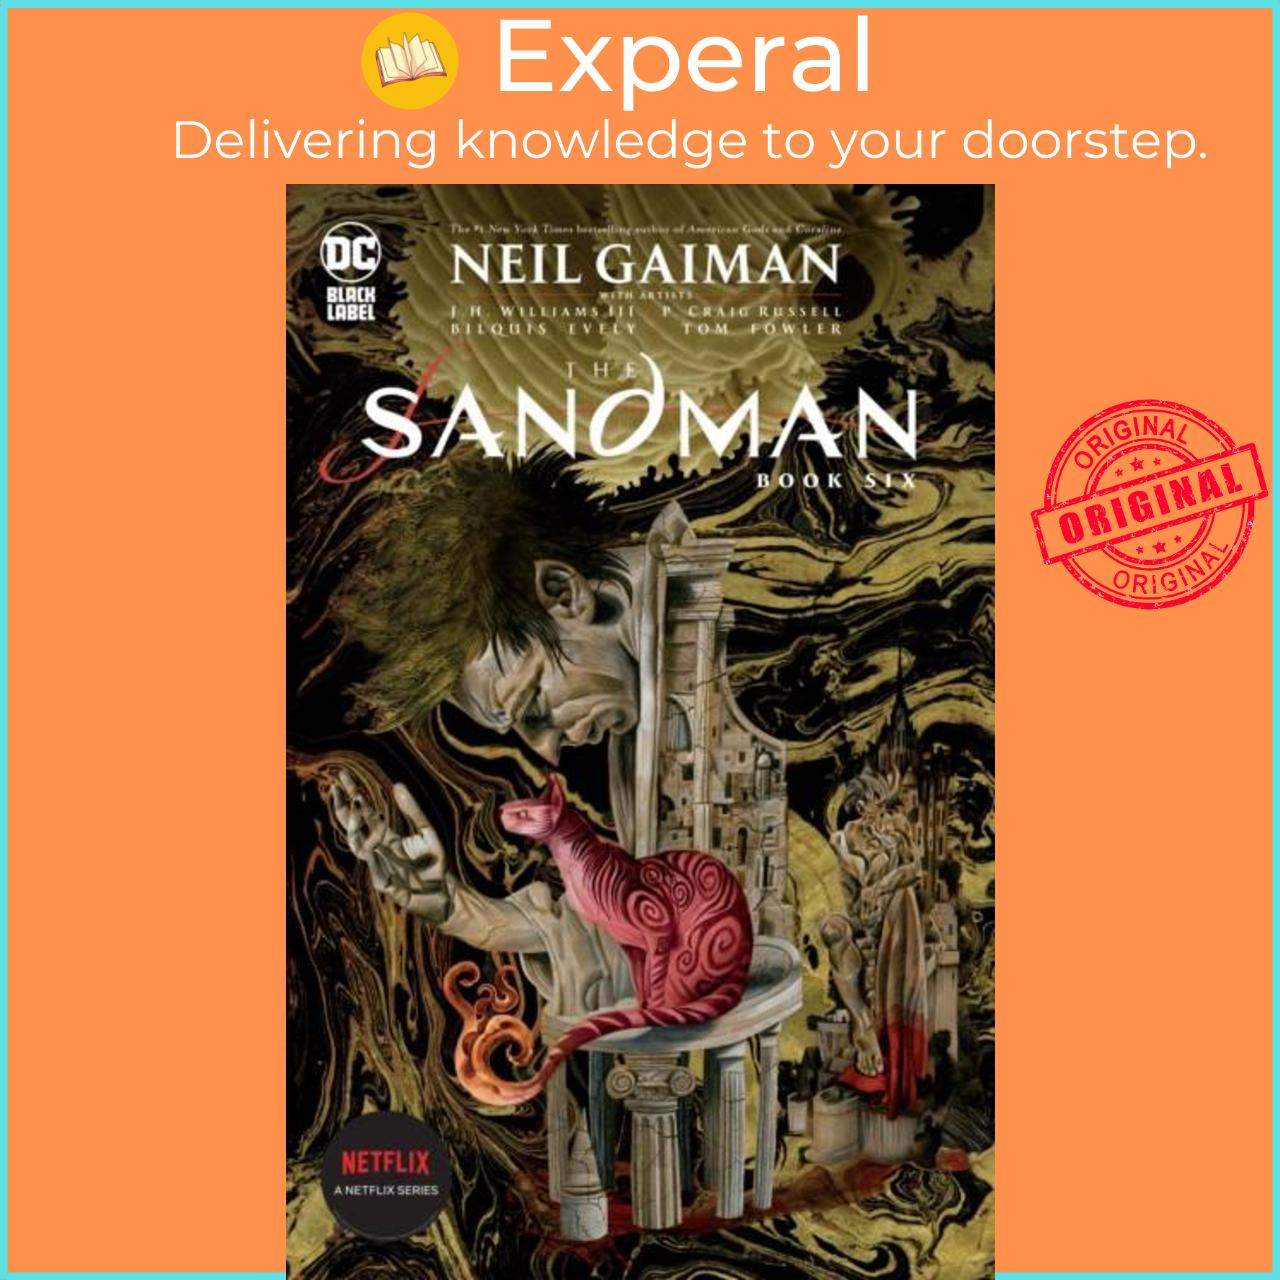 Sách - The Sandman Book Six by Neil Gaiman (UK edition, paperback)